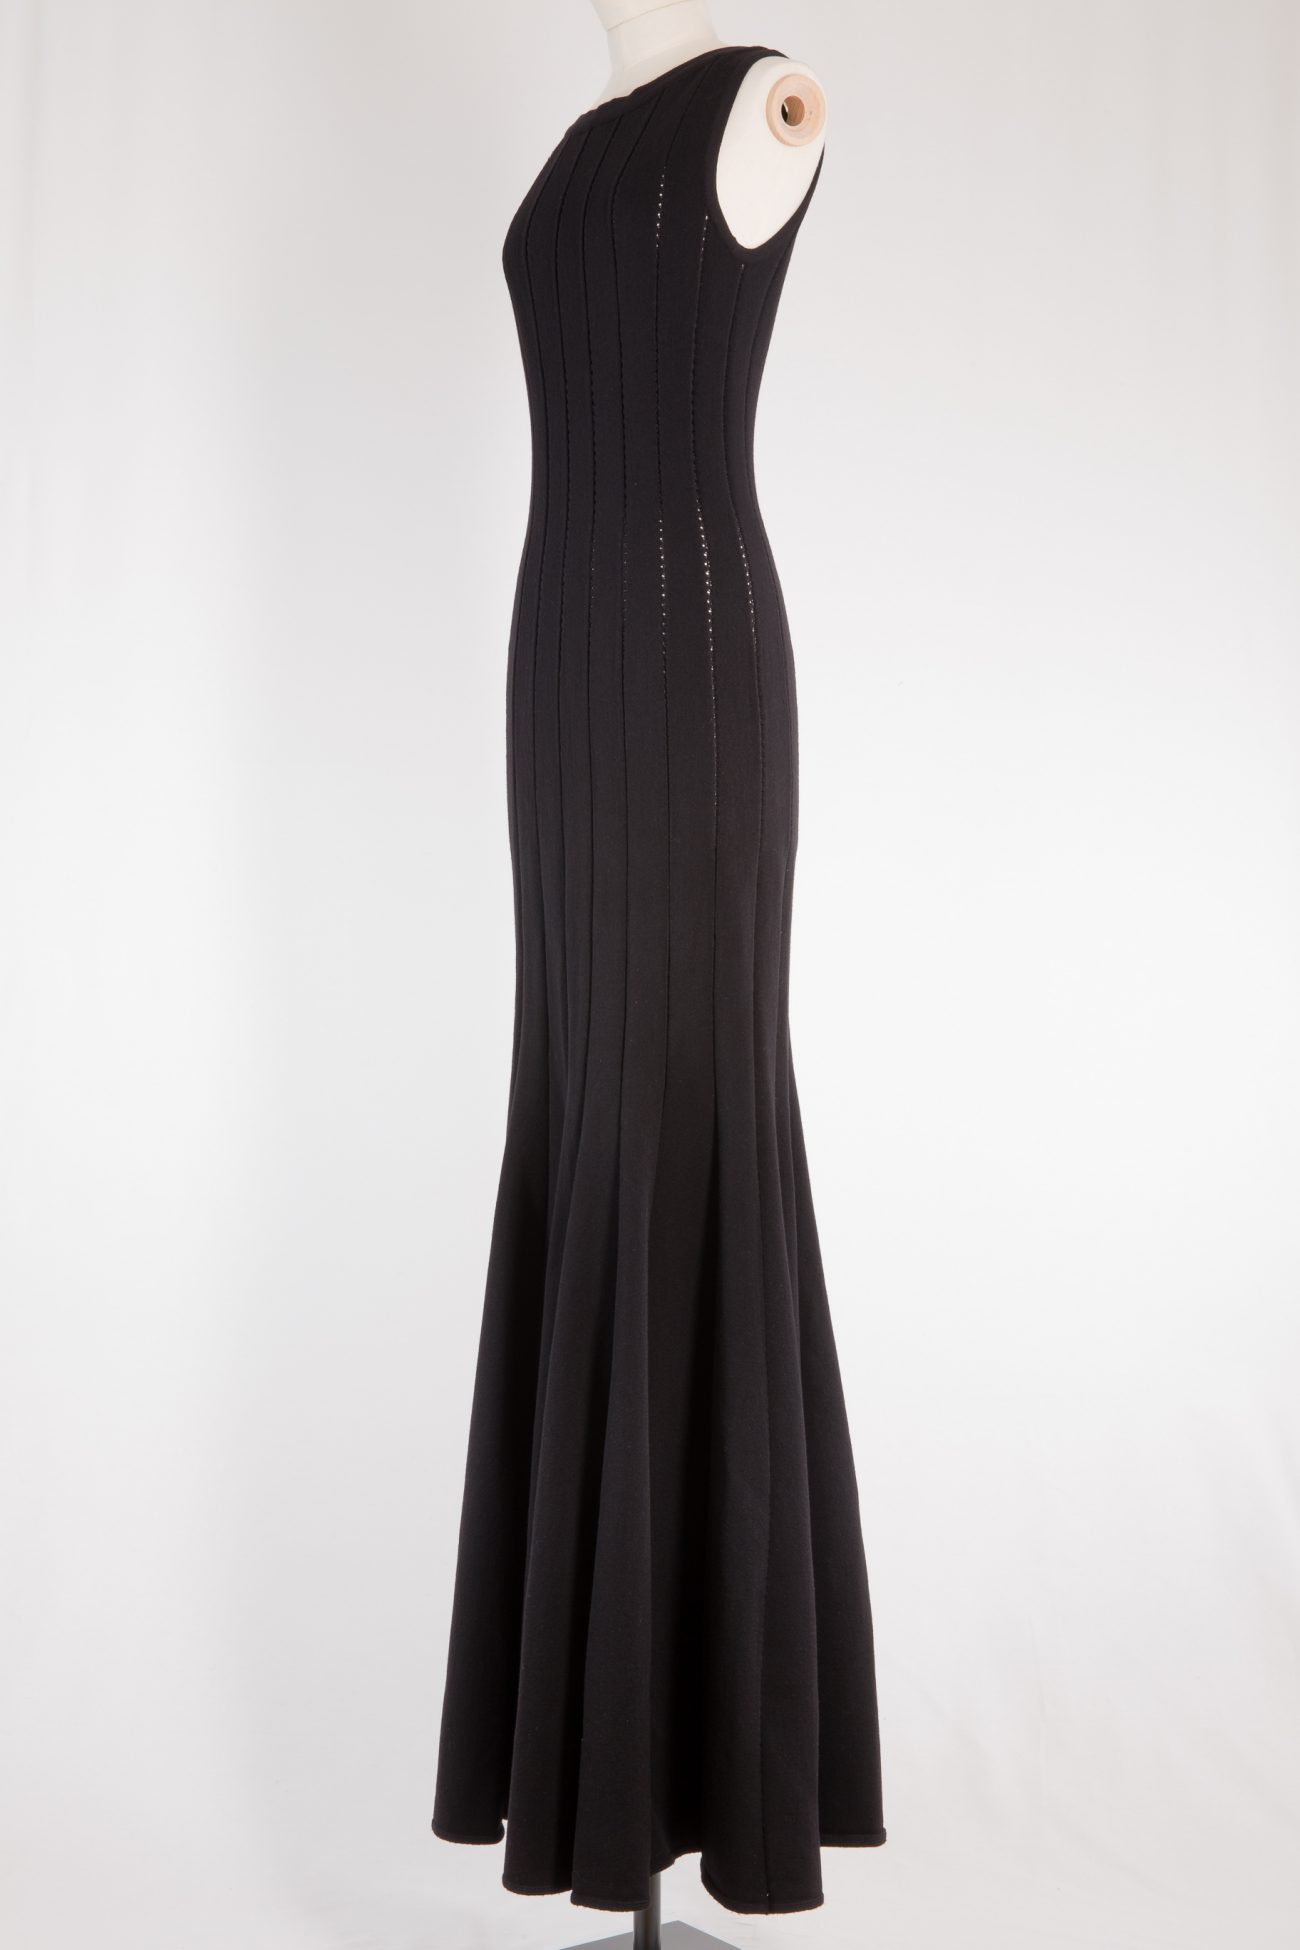 Louis Vuitton Dress, FR40 - Huntessa Luxury Online Consignment Boutique